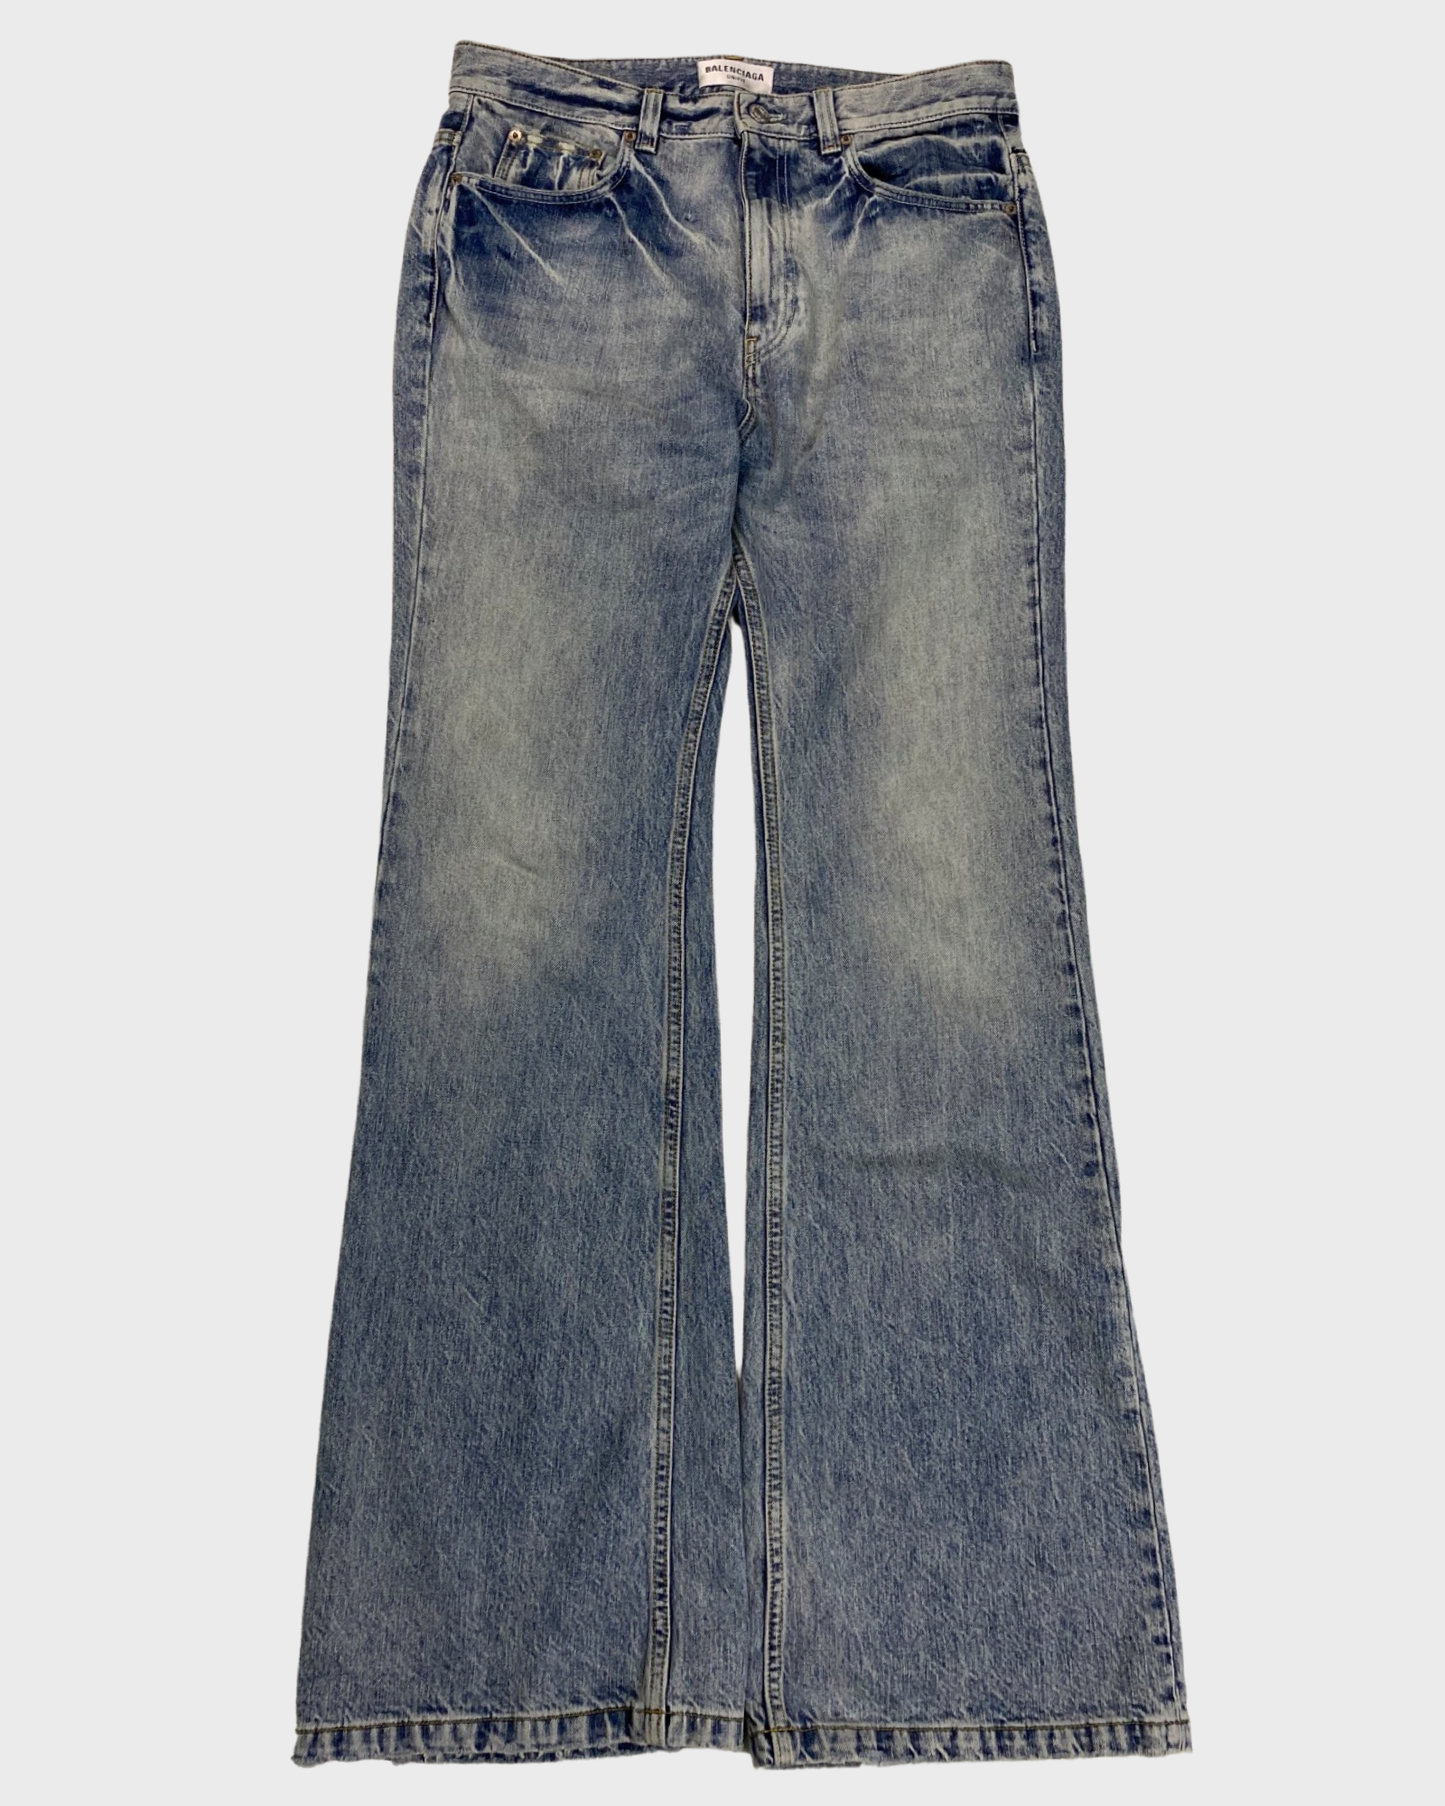 Balenciaga Fall 22 lost tape flared jeans in light Blue SZ:XS